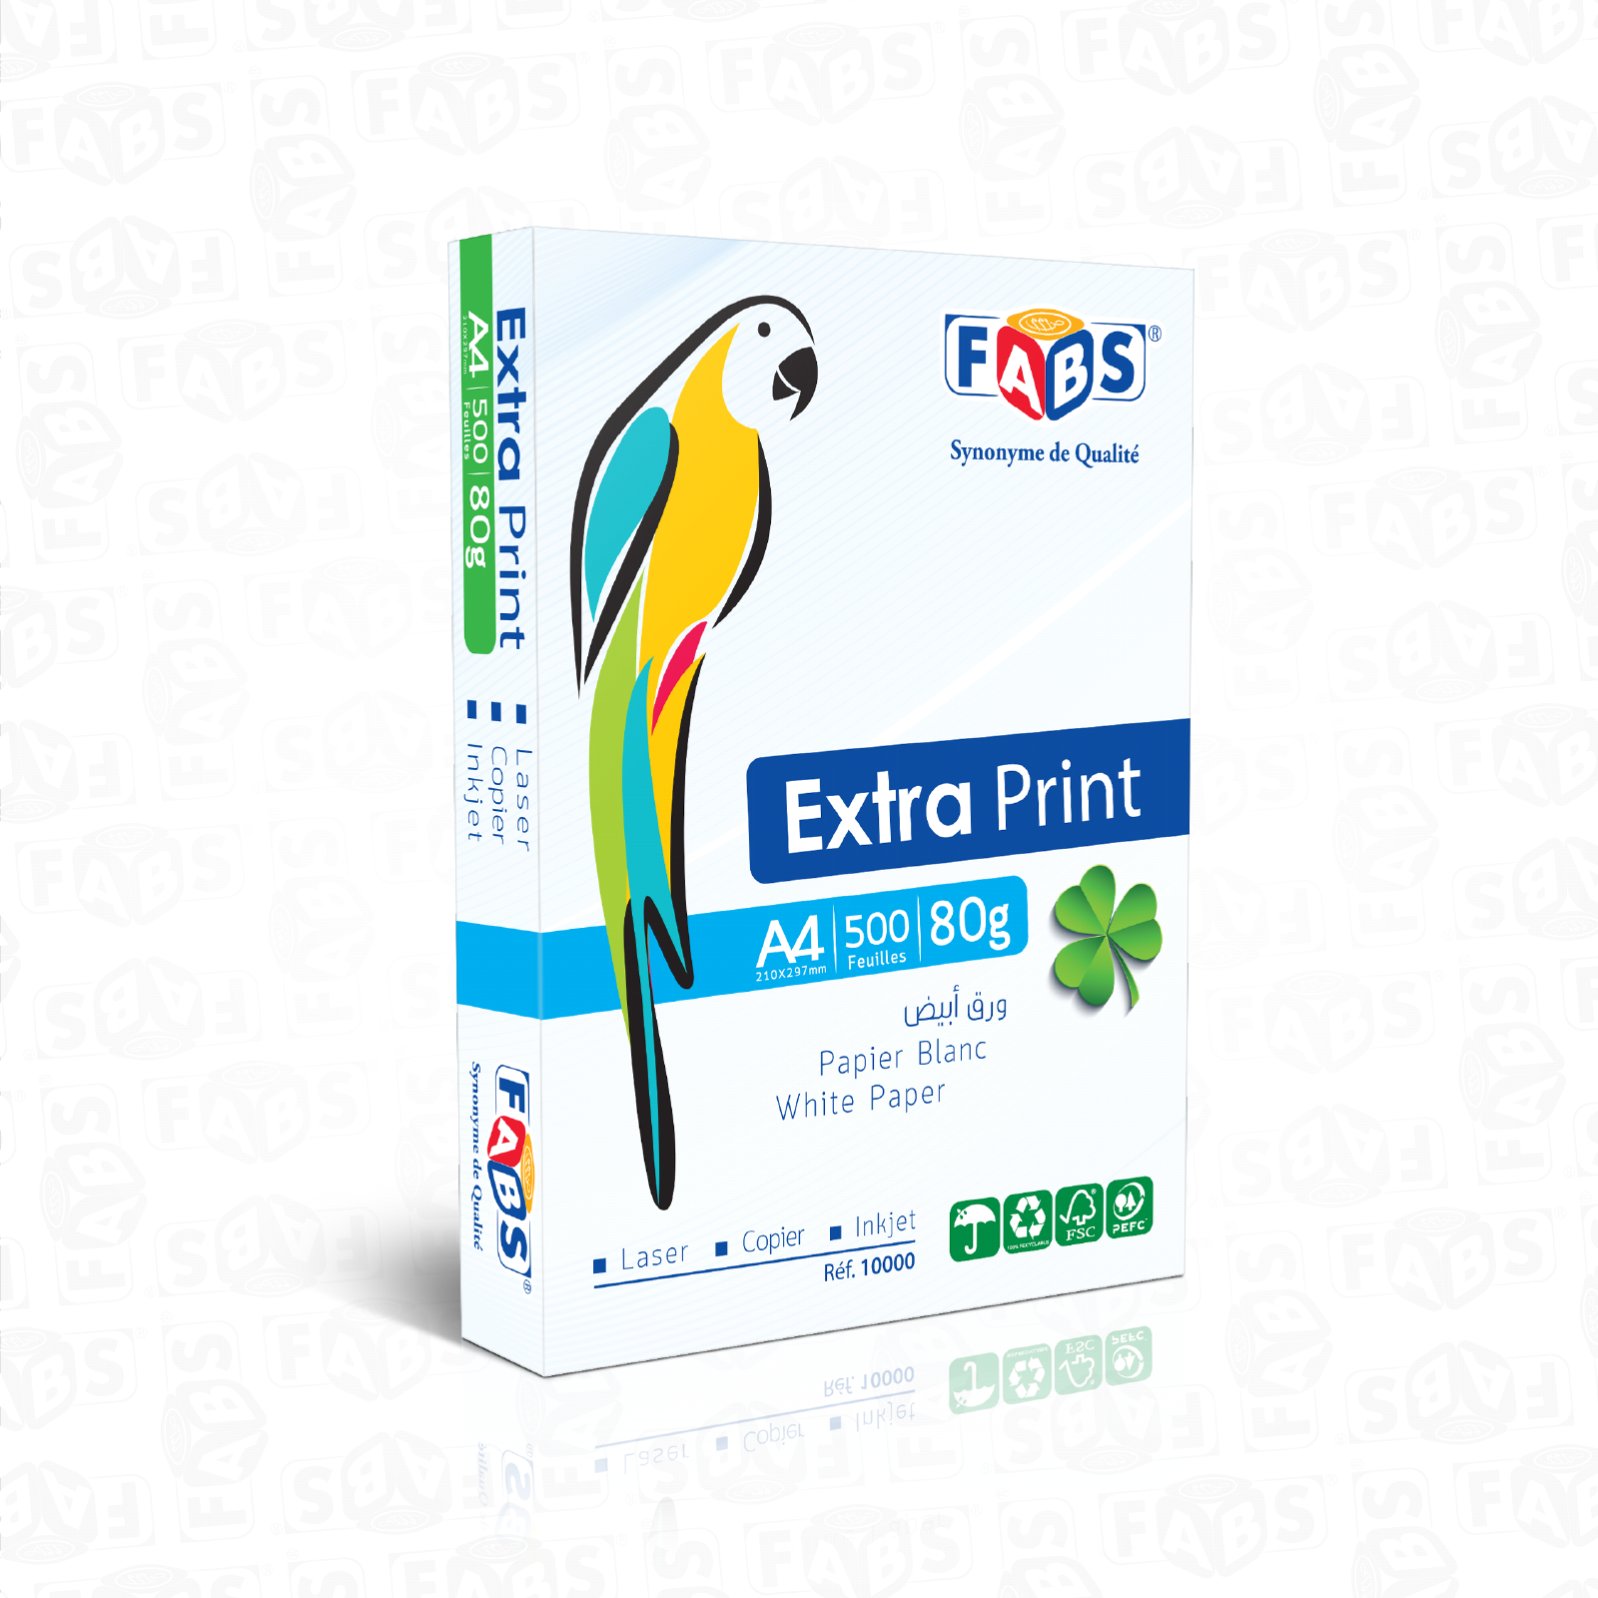 Papier extra blanc format A3 80g 500 feuilles - GALAXIE PAP